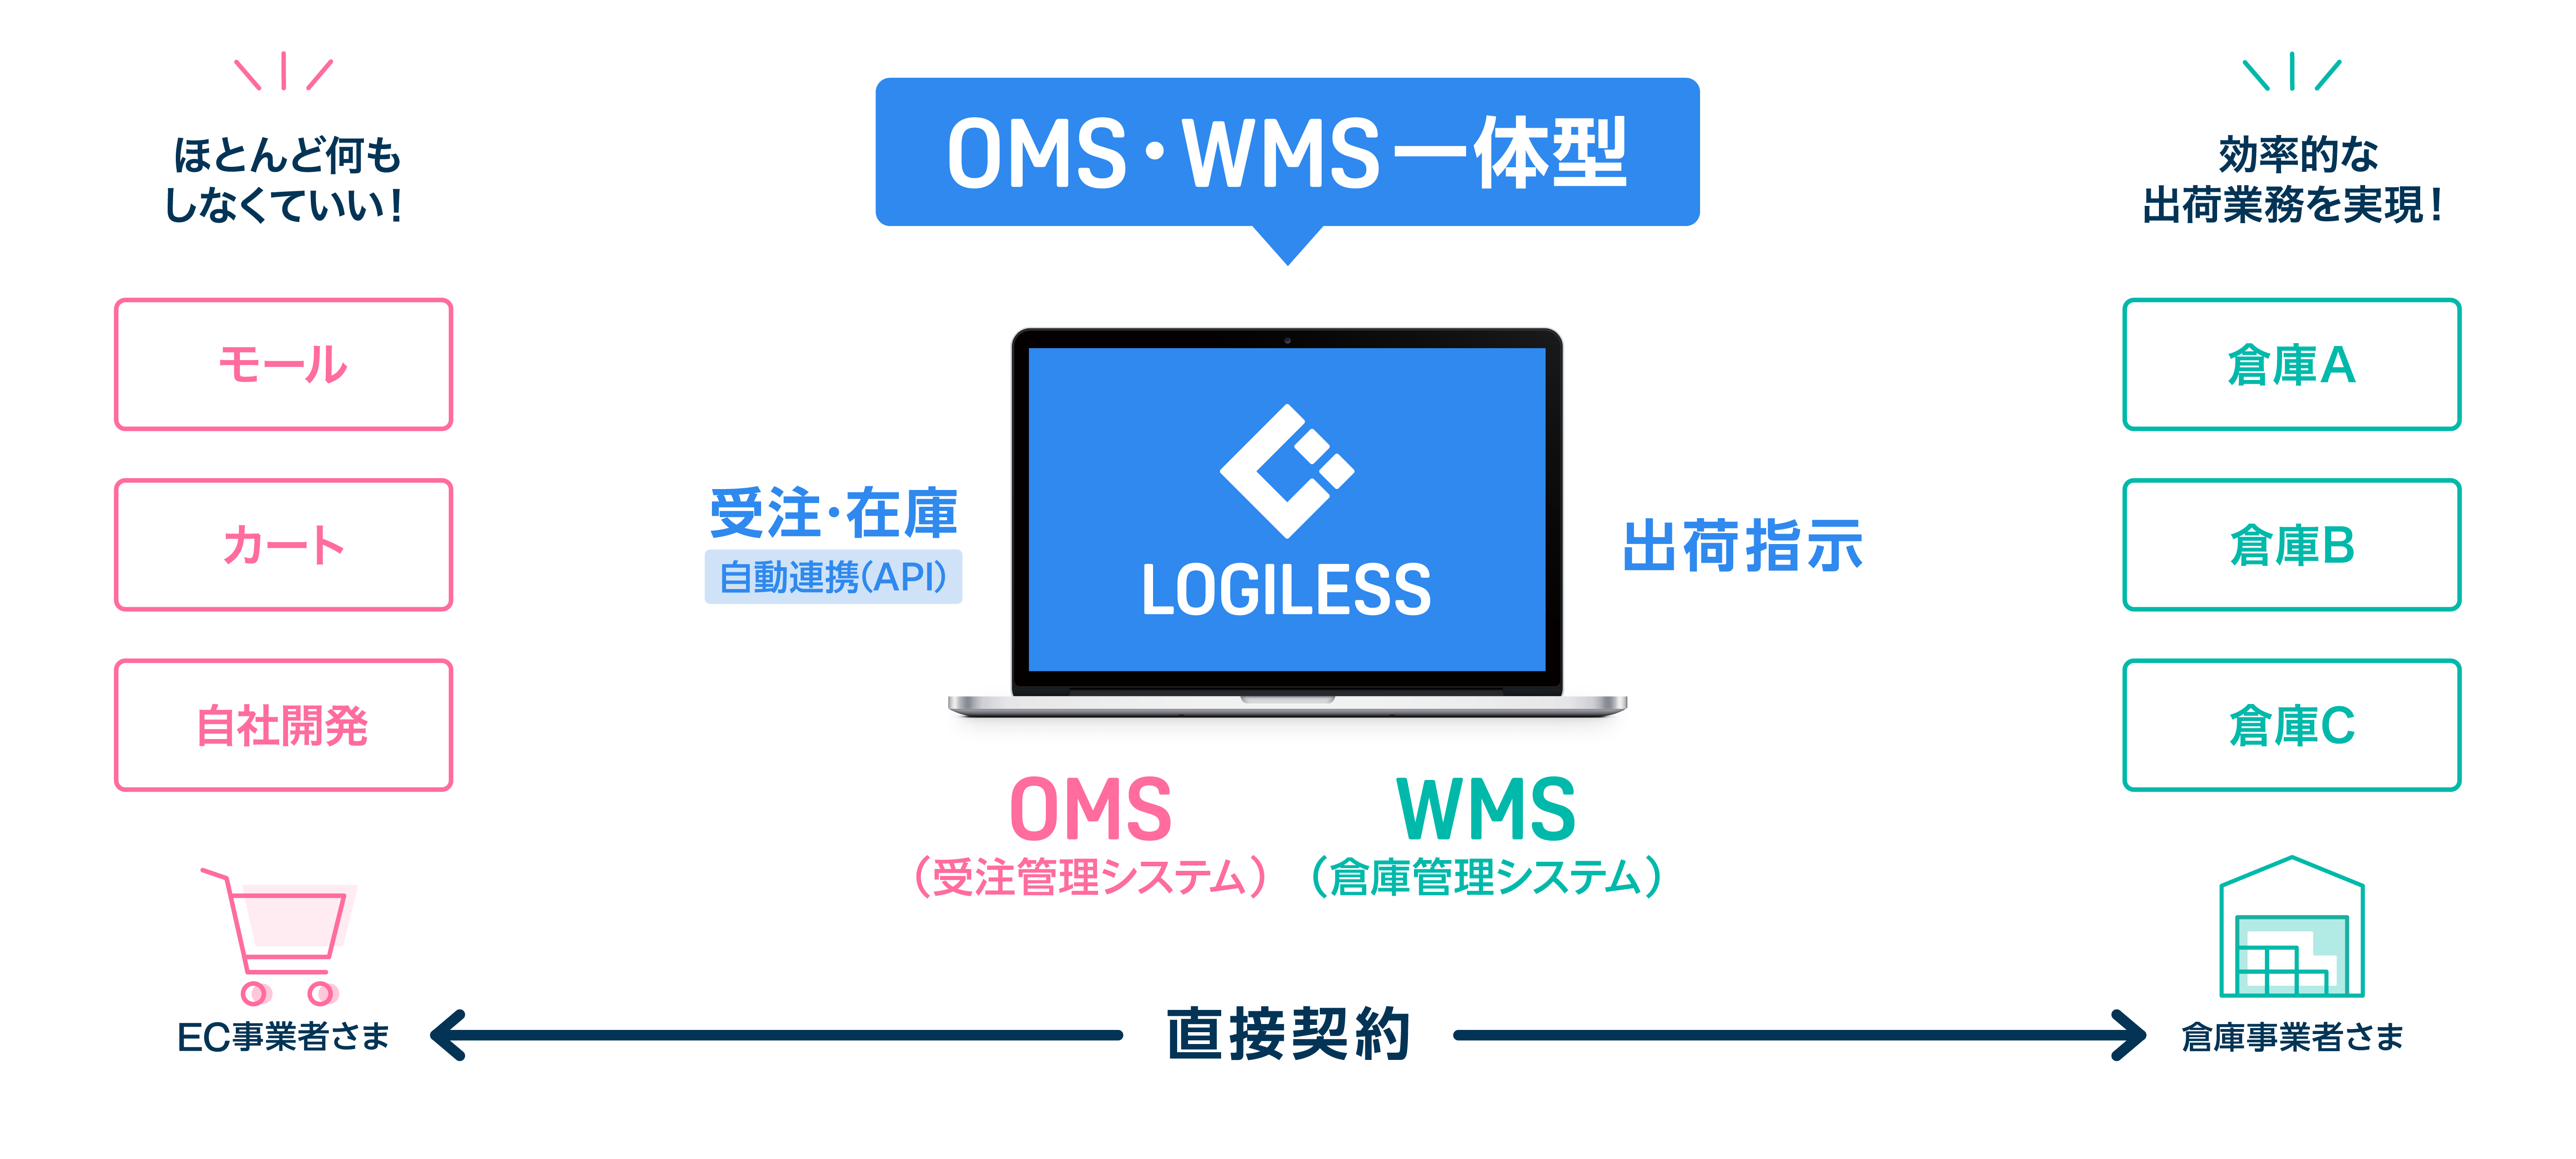 EC自動出荷システムLOGILESSは、OMS（受注管理システム）とWMS（倉庫管理システム）一体型システムです